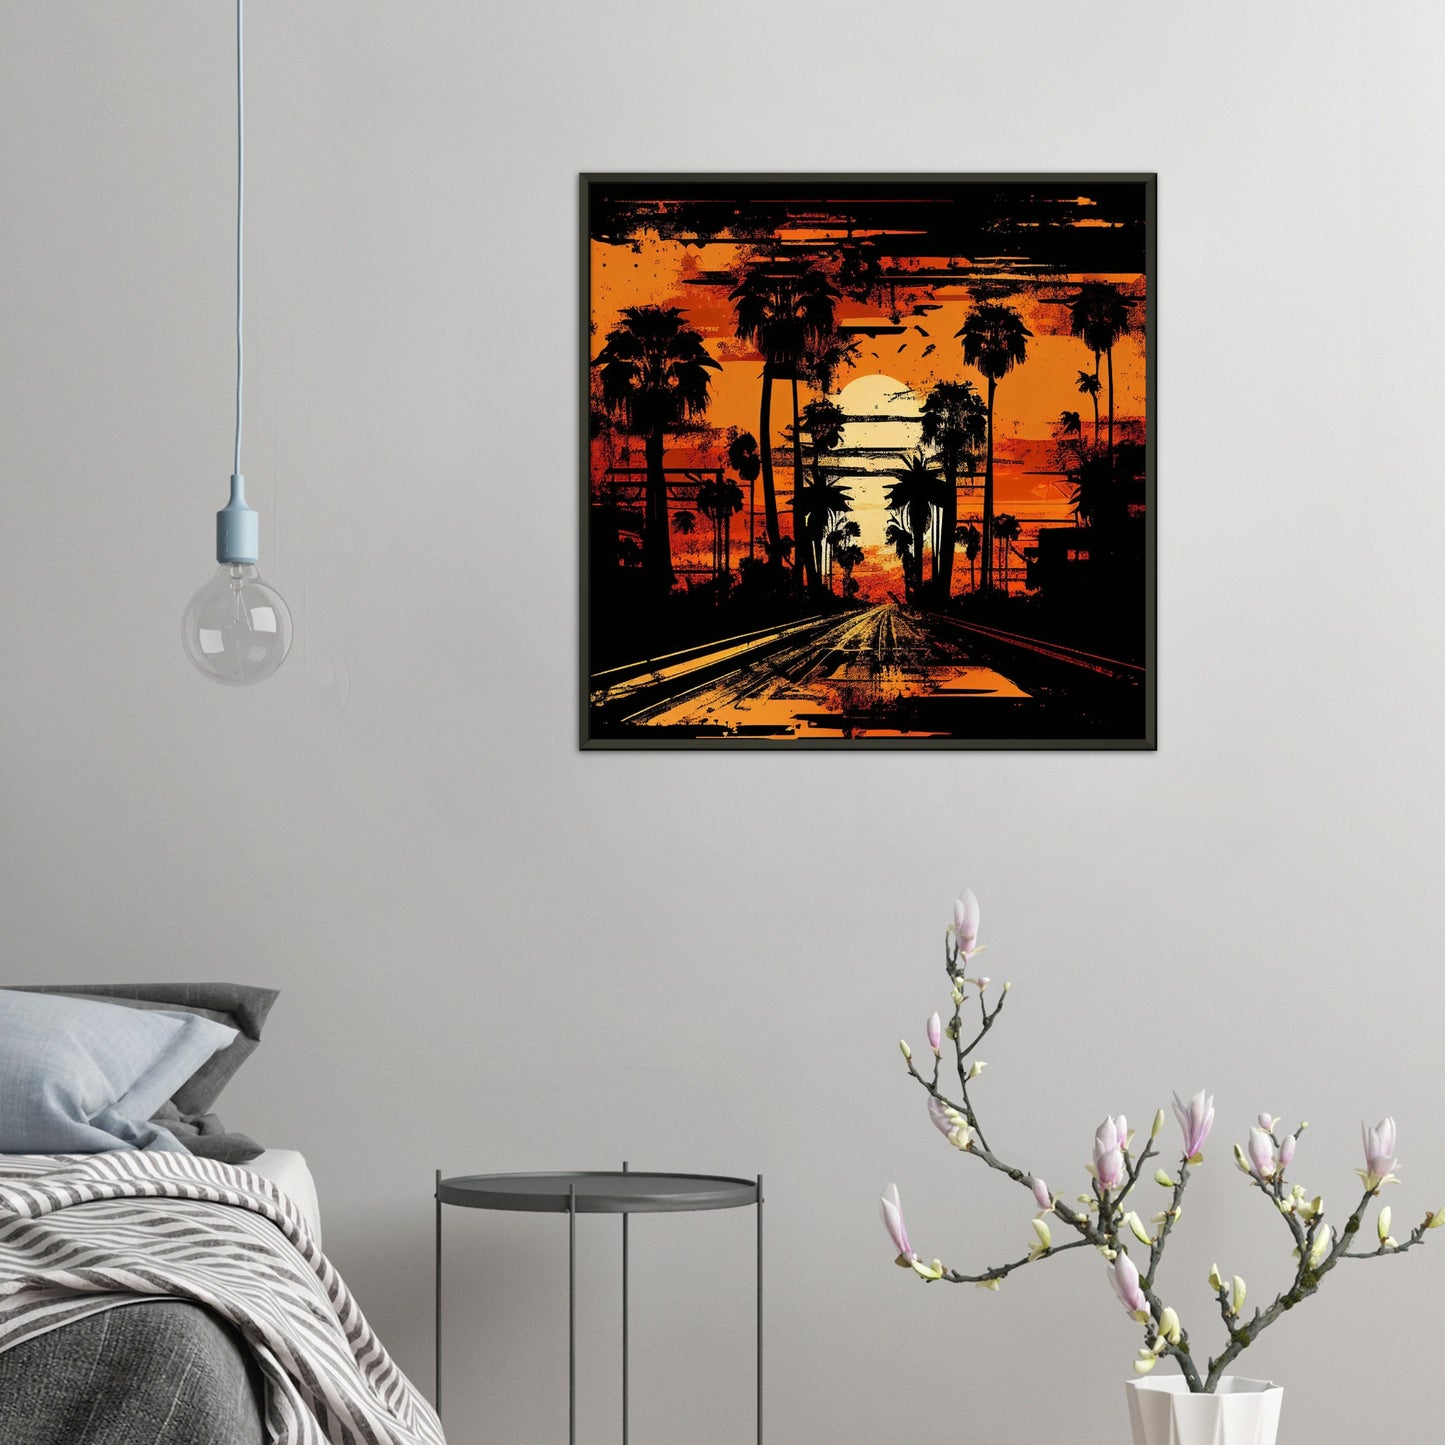 Vampire Art Grunge Sunset Boulevard - Premium Matte Paper Metal Framed Poster - 70x70cm (28x28inch)